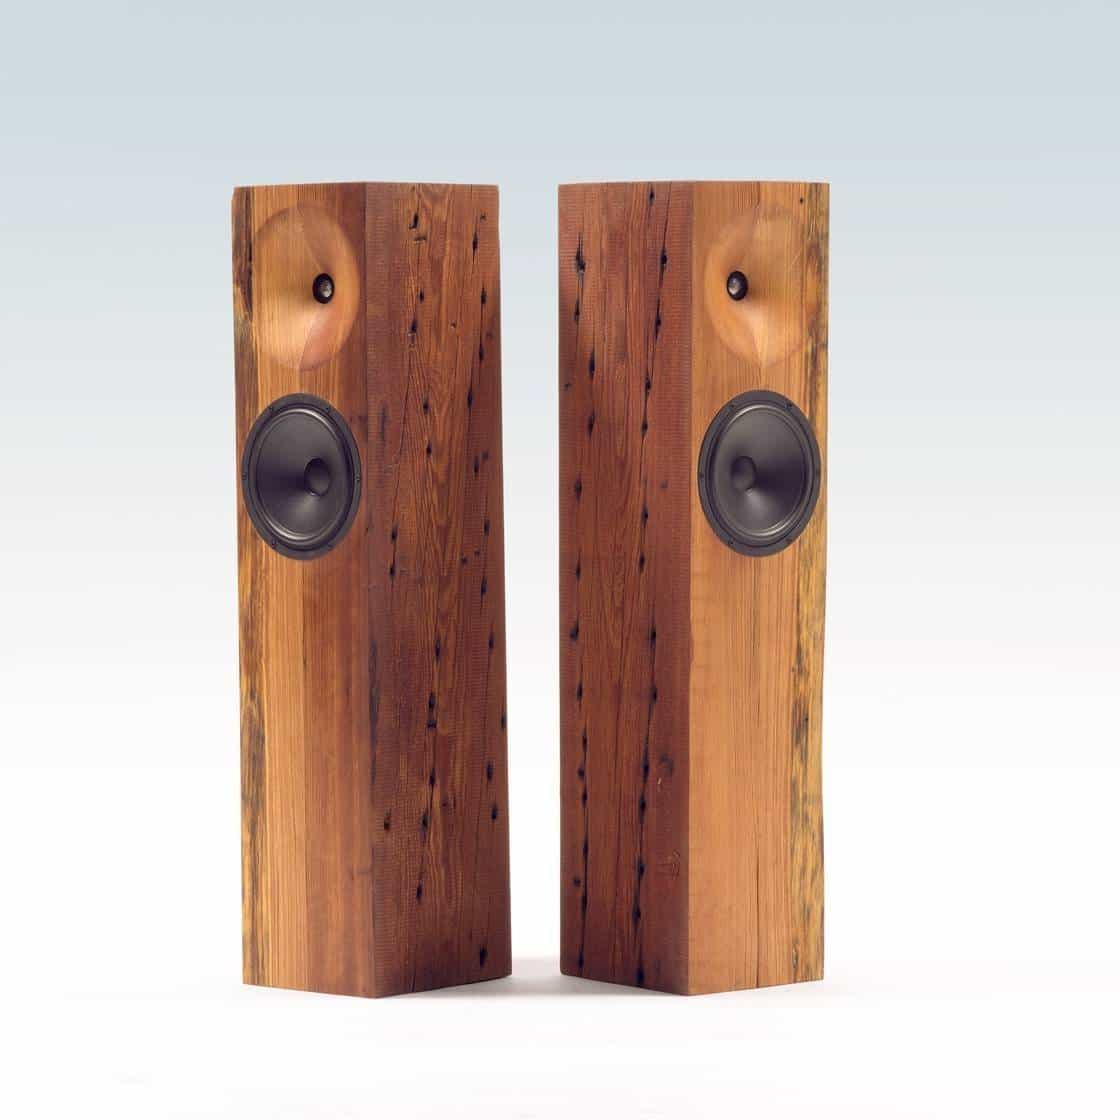 Fern & Roby beam speakers 8